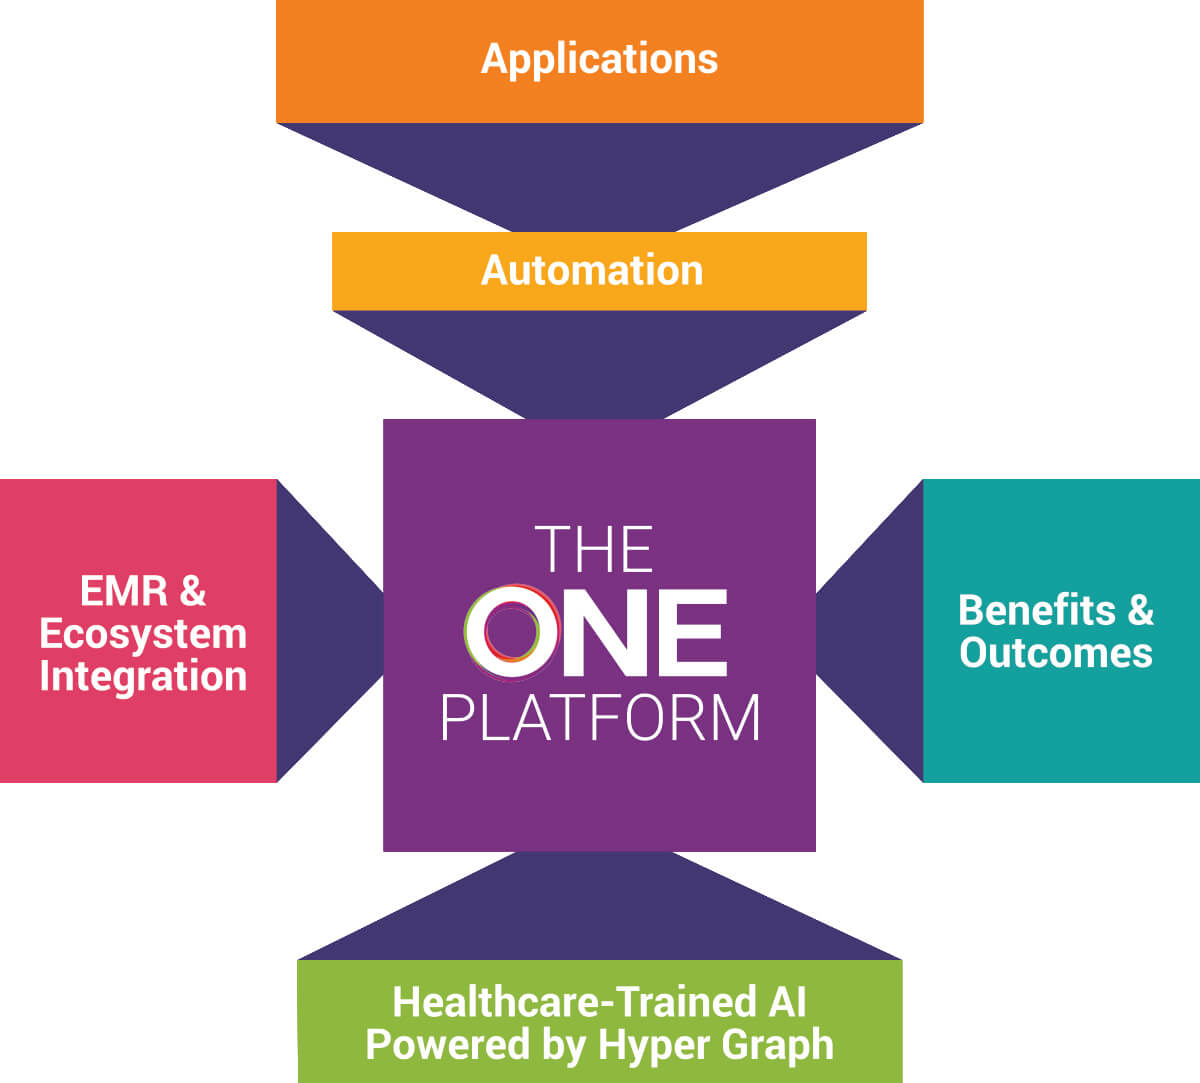 The ONE Platform